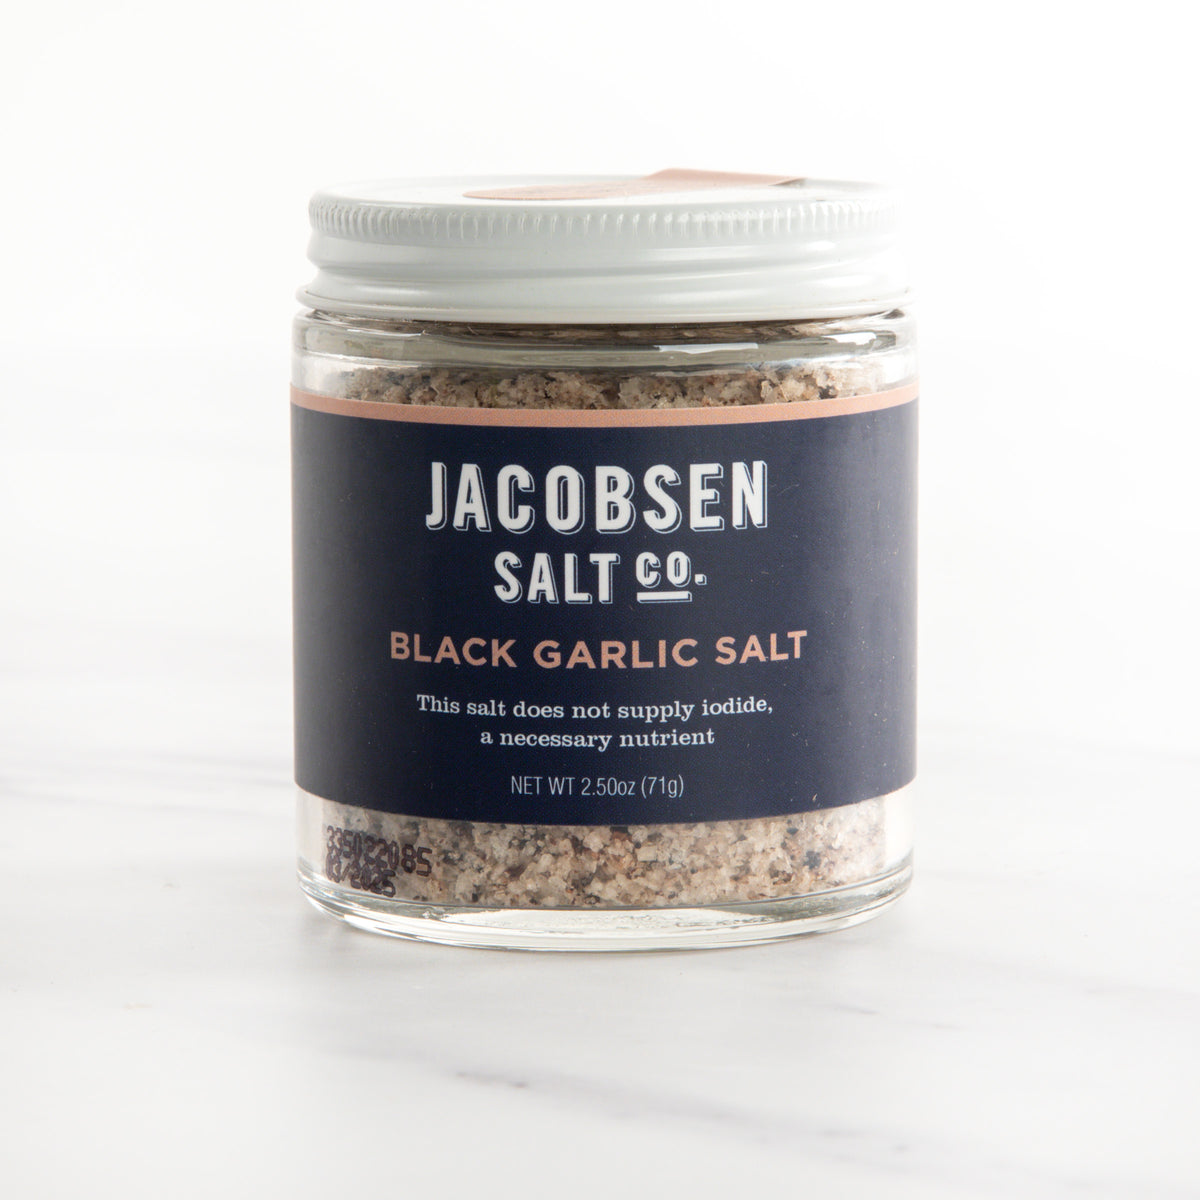 Infused Black Garlic Salt Jacobsen Salt Co. : Discover the Right